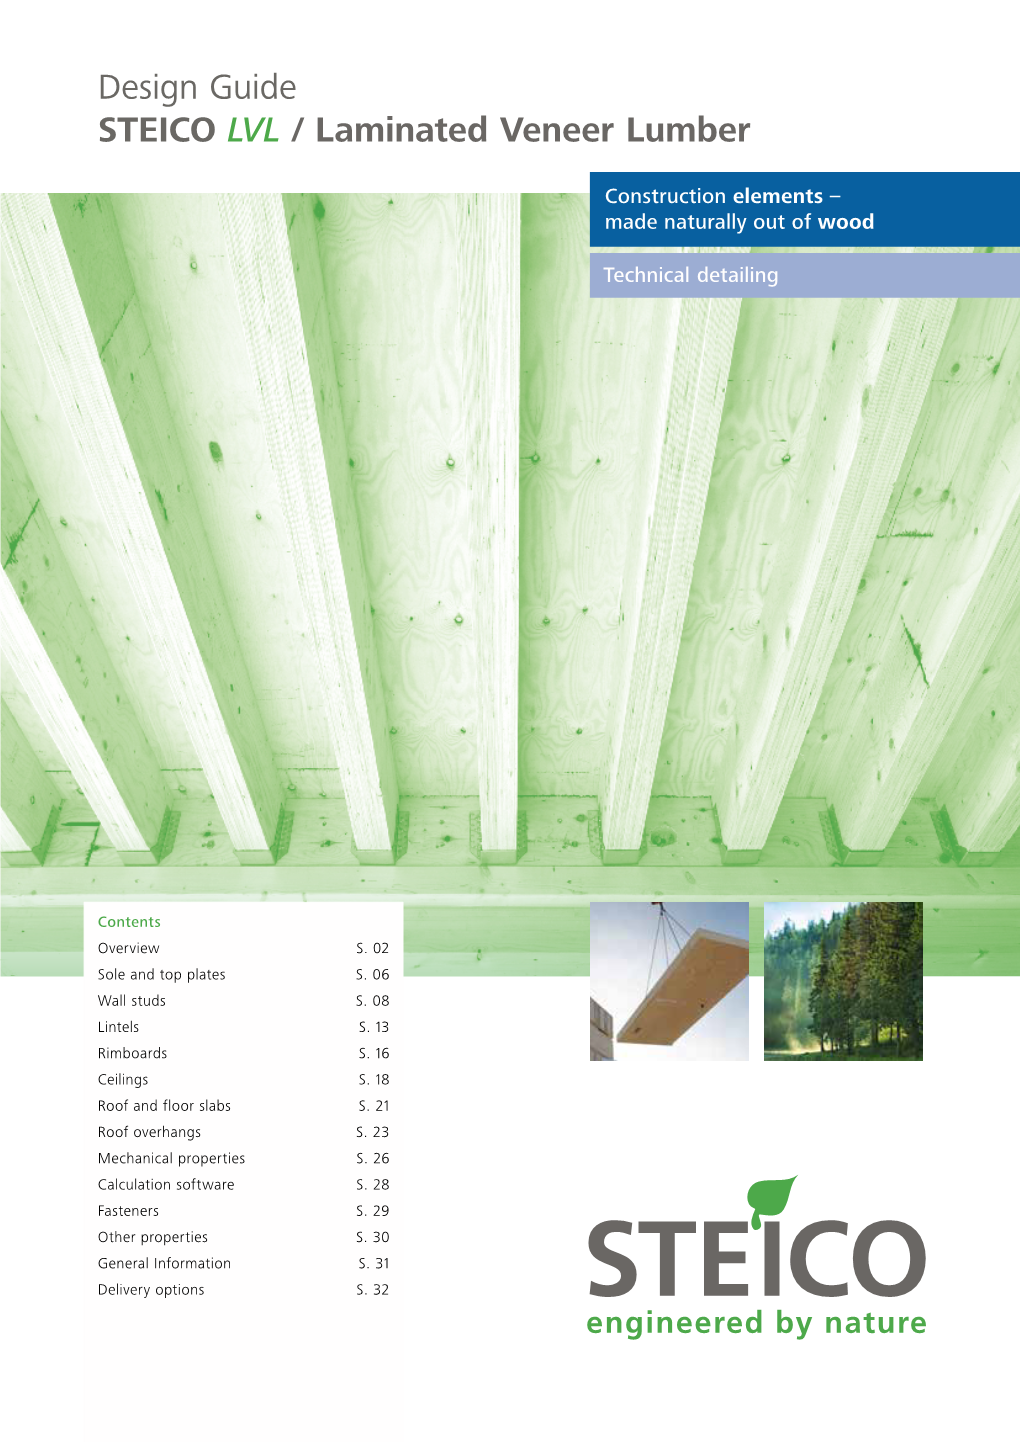 Design Guide STEICO LVL / Laminated Veneer Lumber